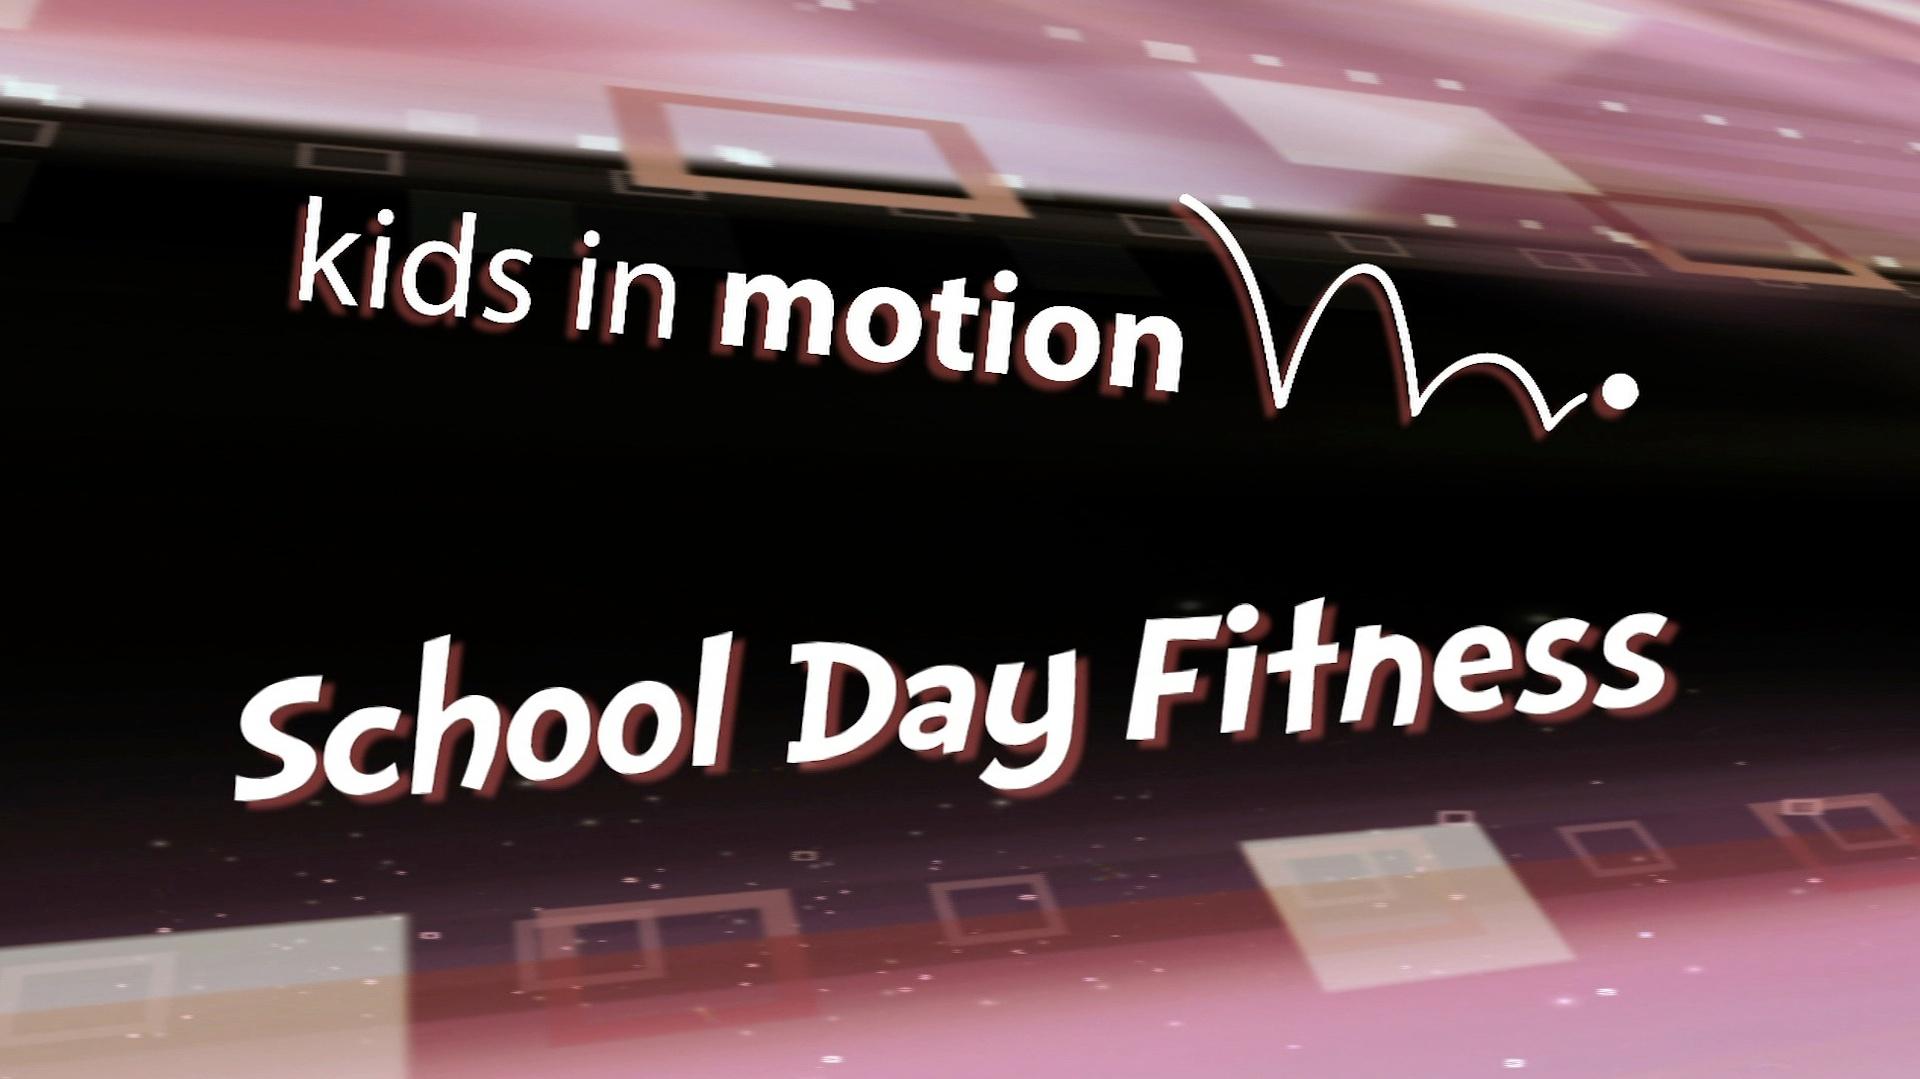 School Day Fitness | PBS LearningMedia